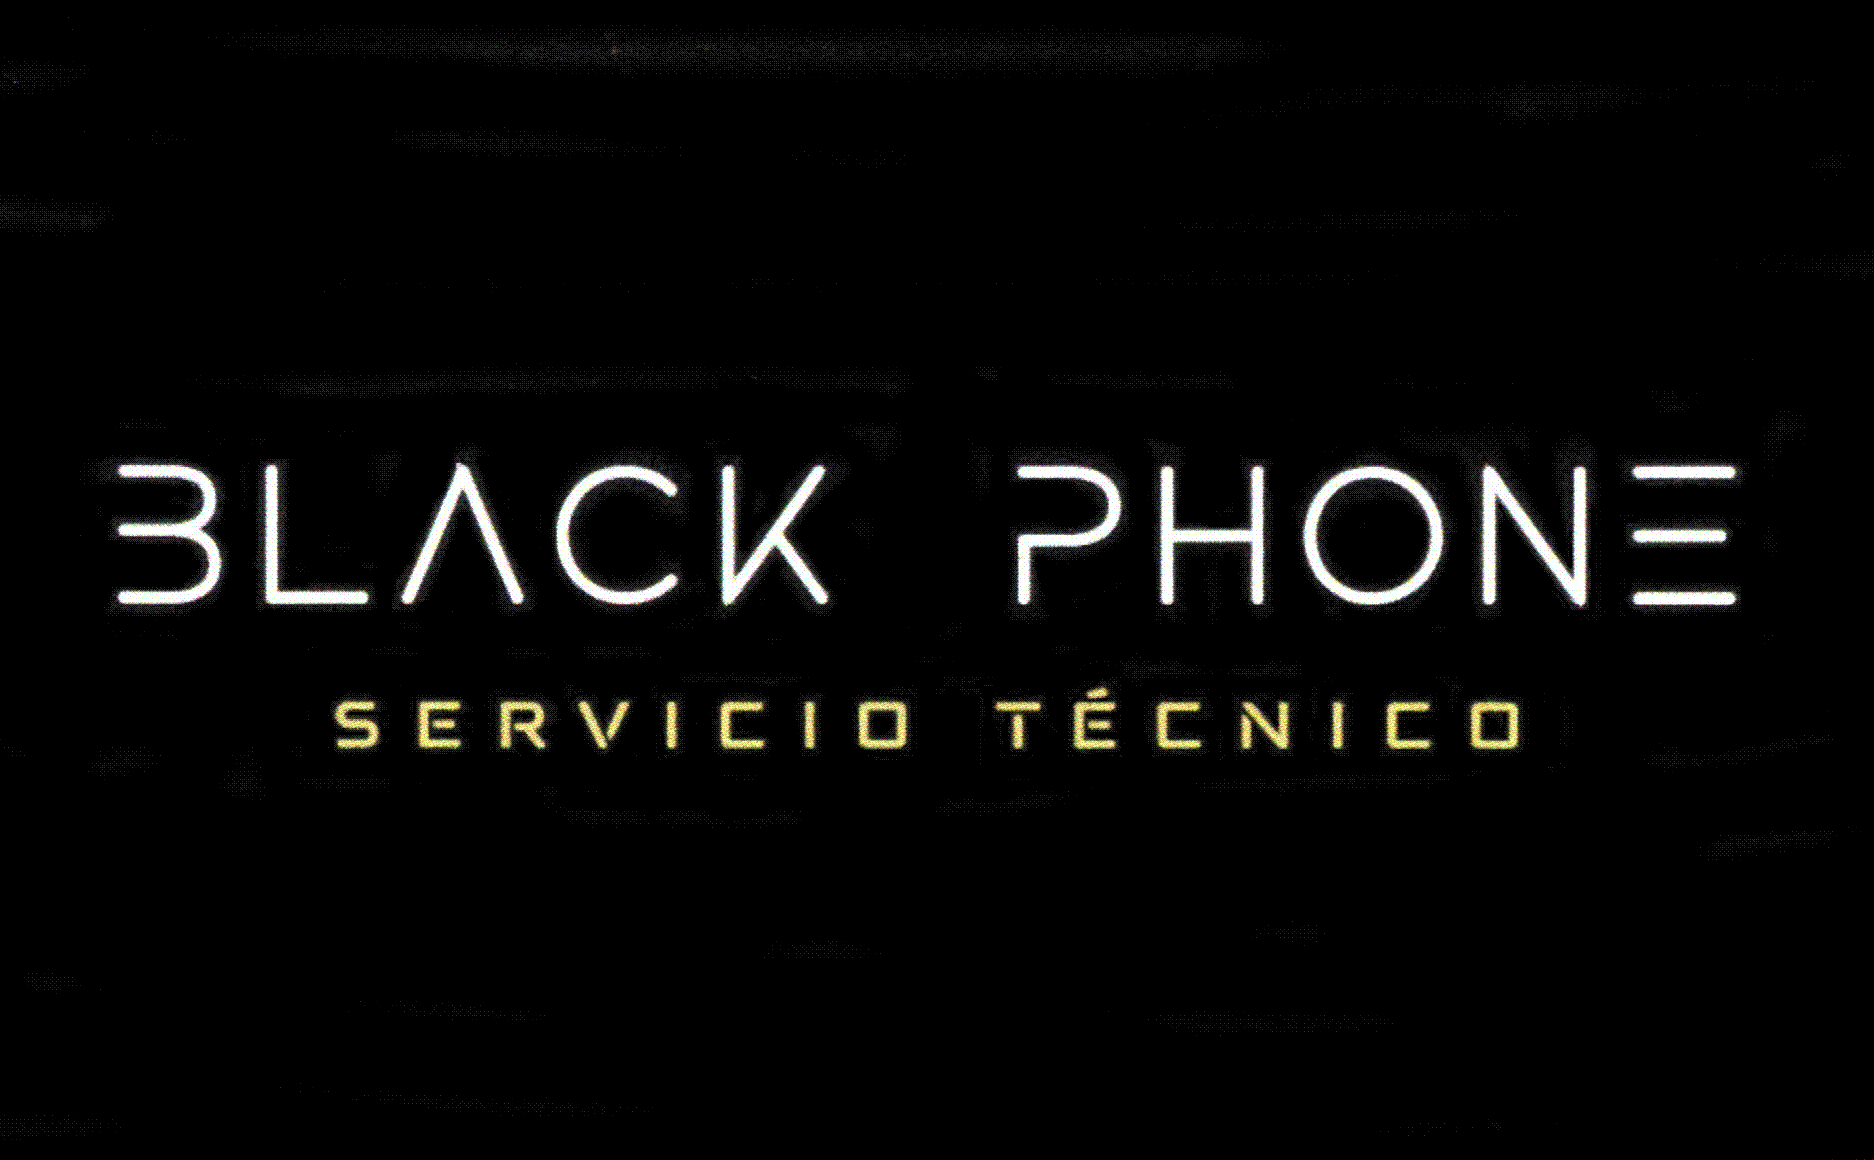 PhoneService